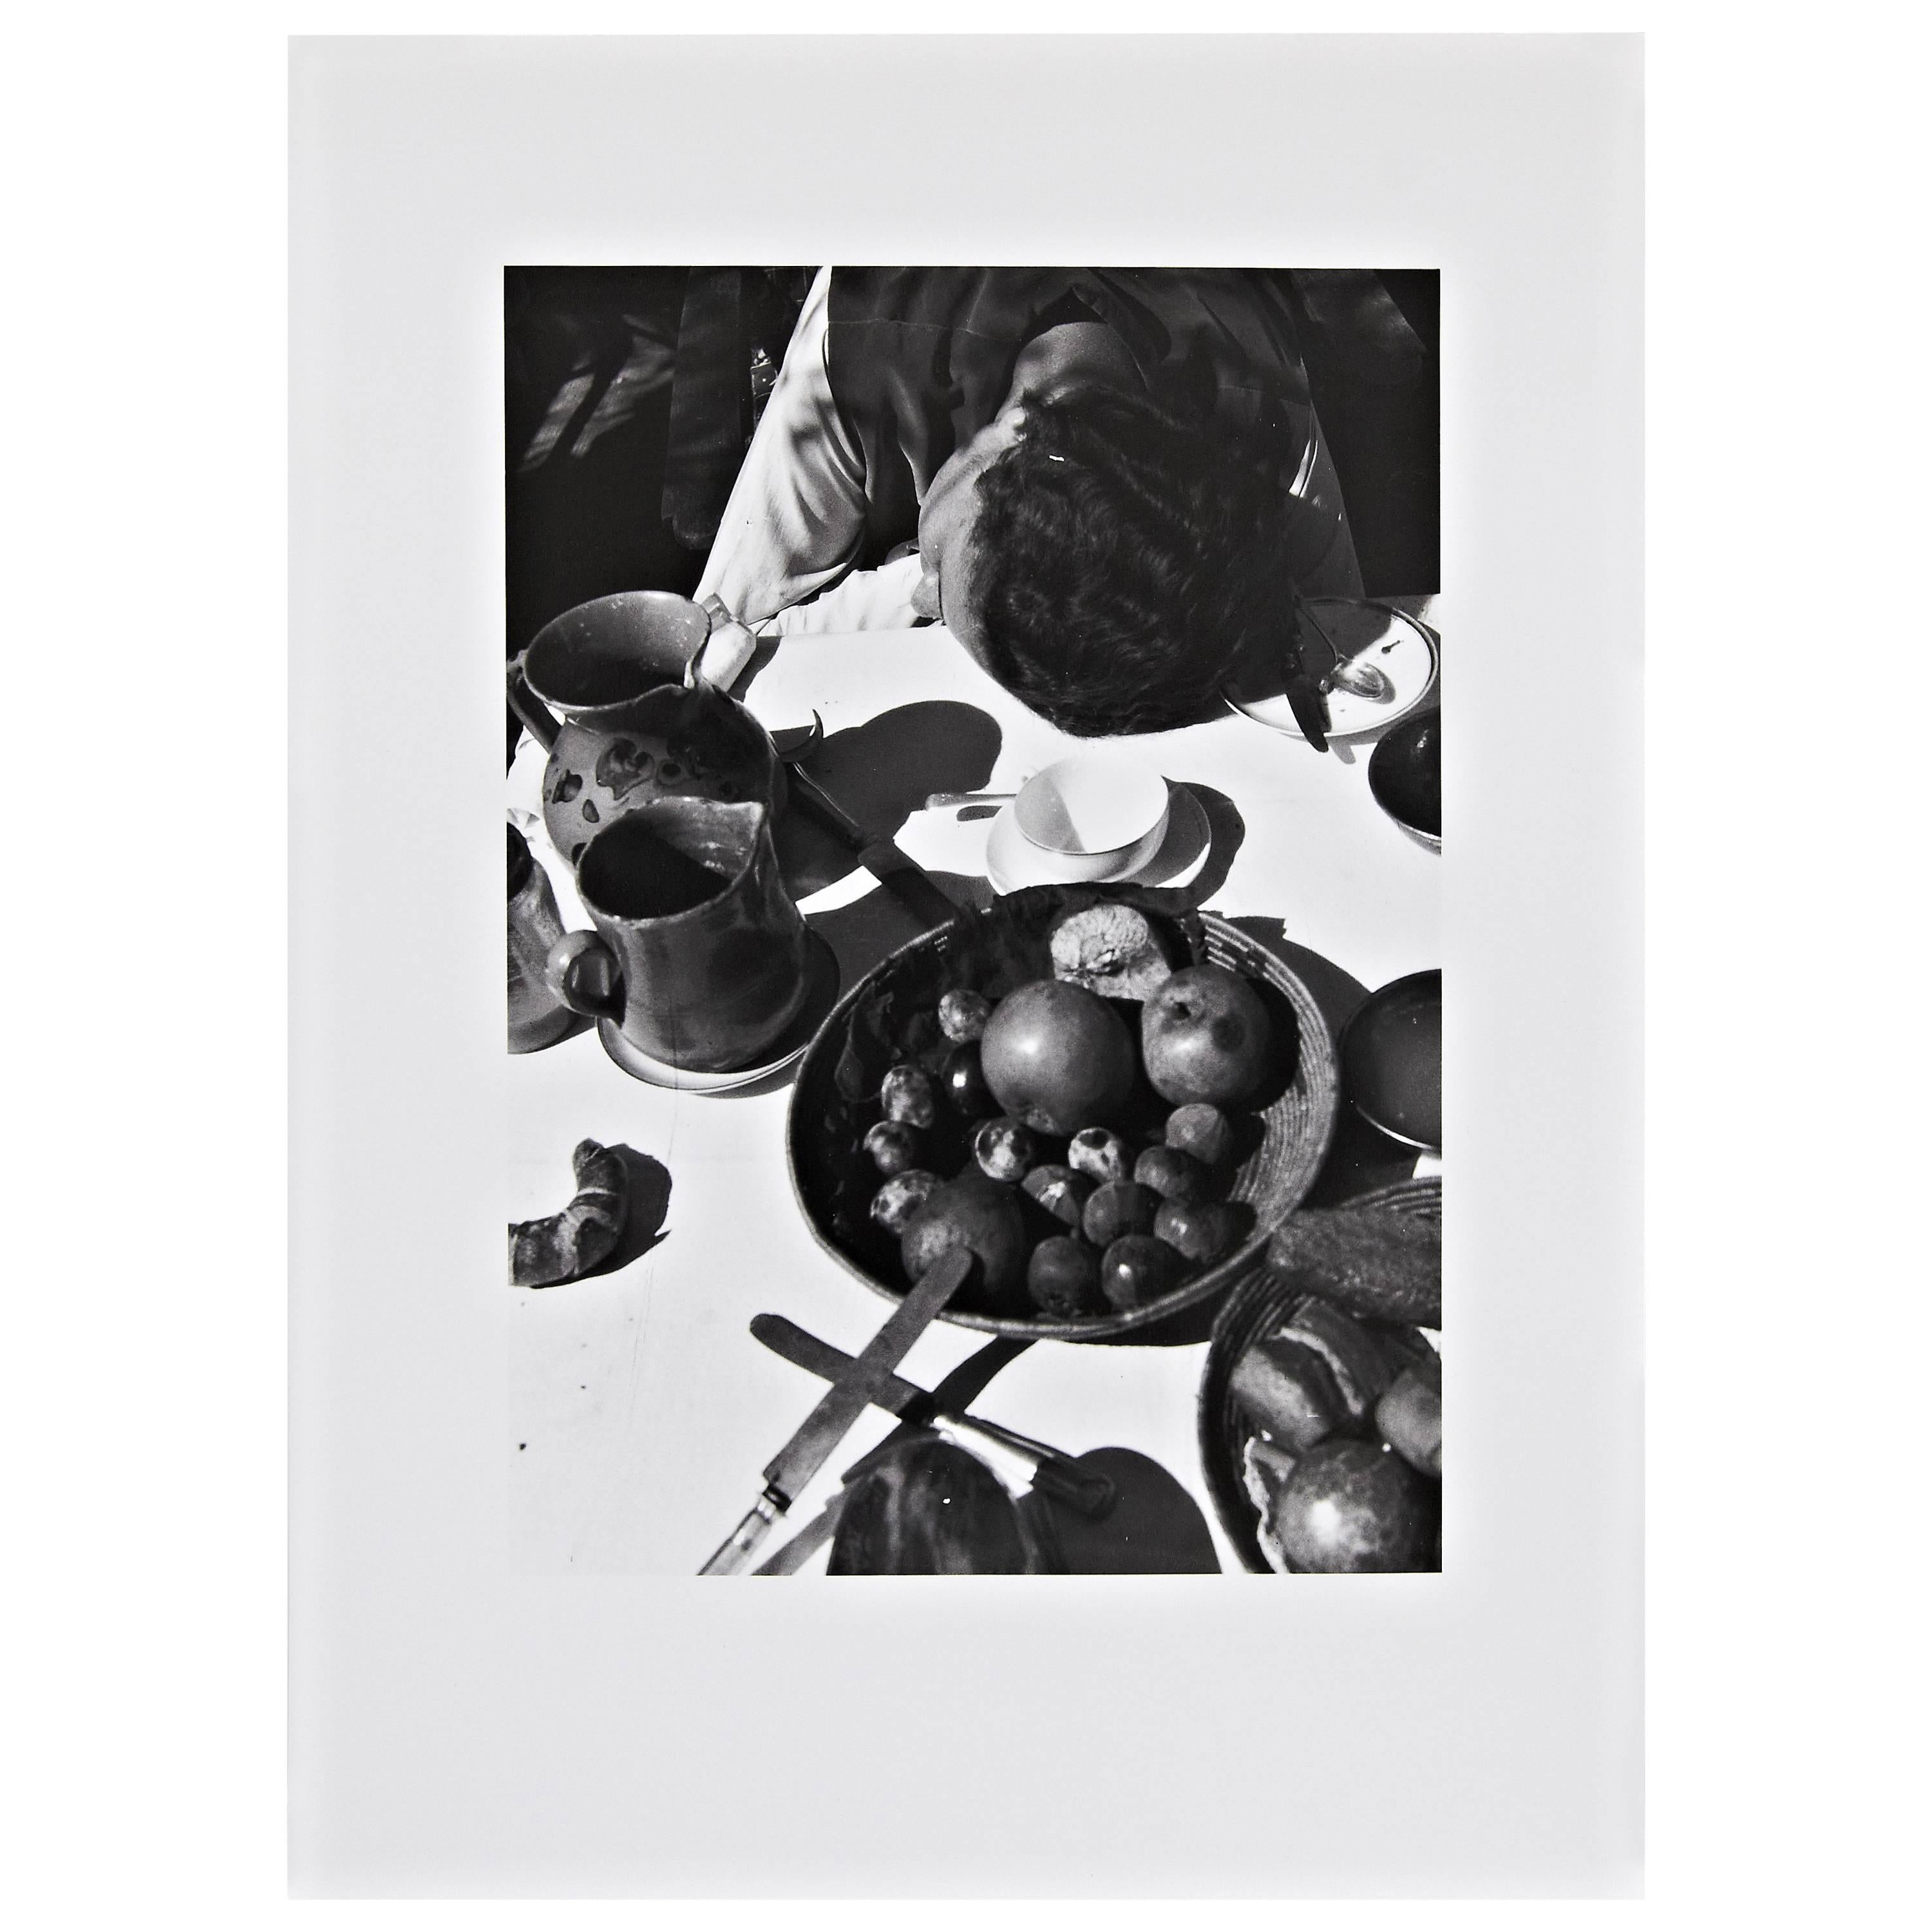 László Moholy-Nagy Black and White Photography - Free Shipping